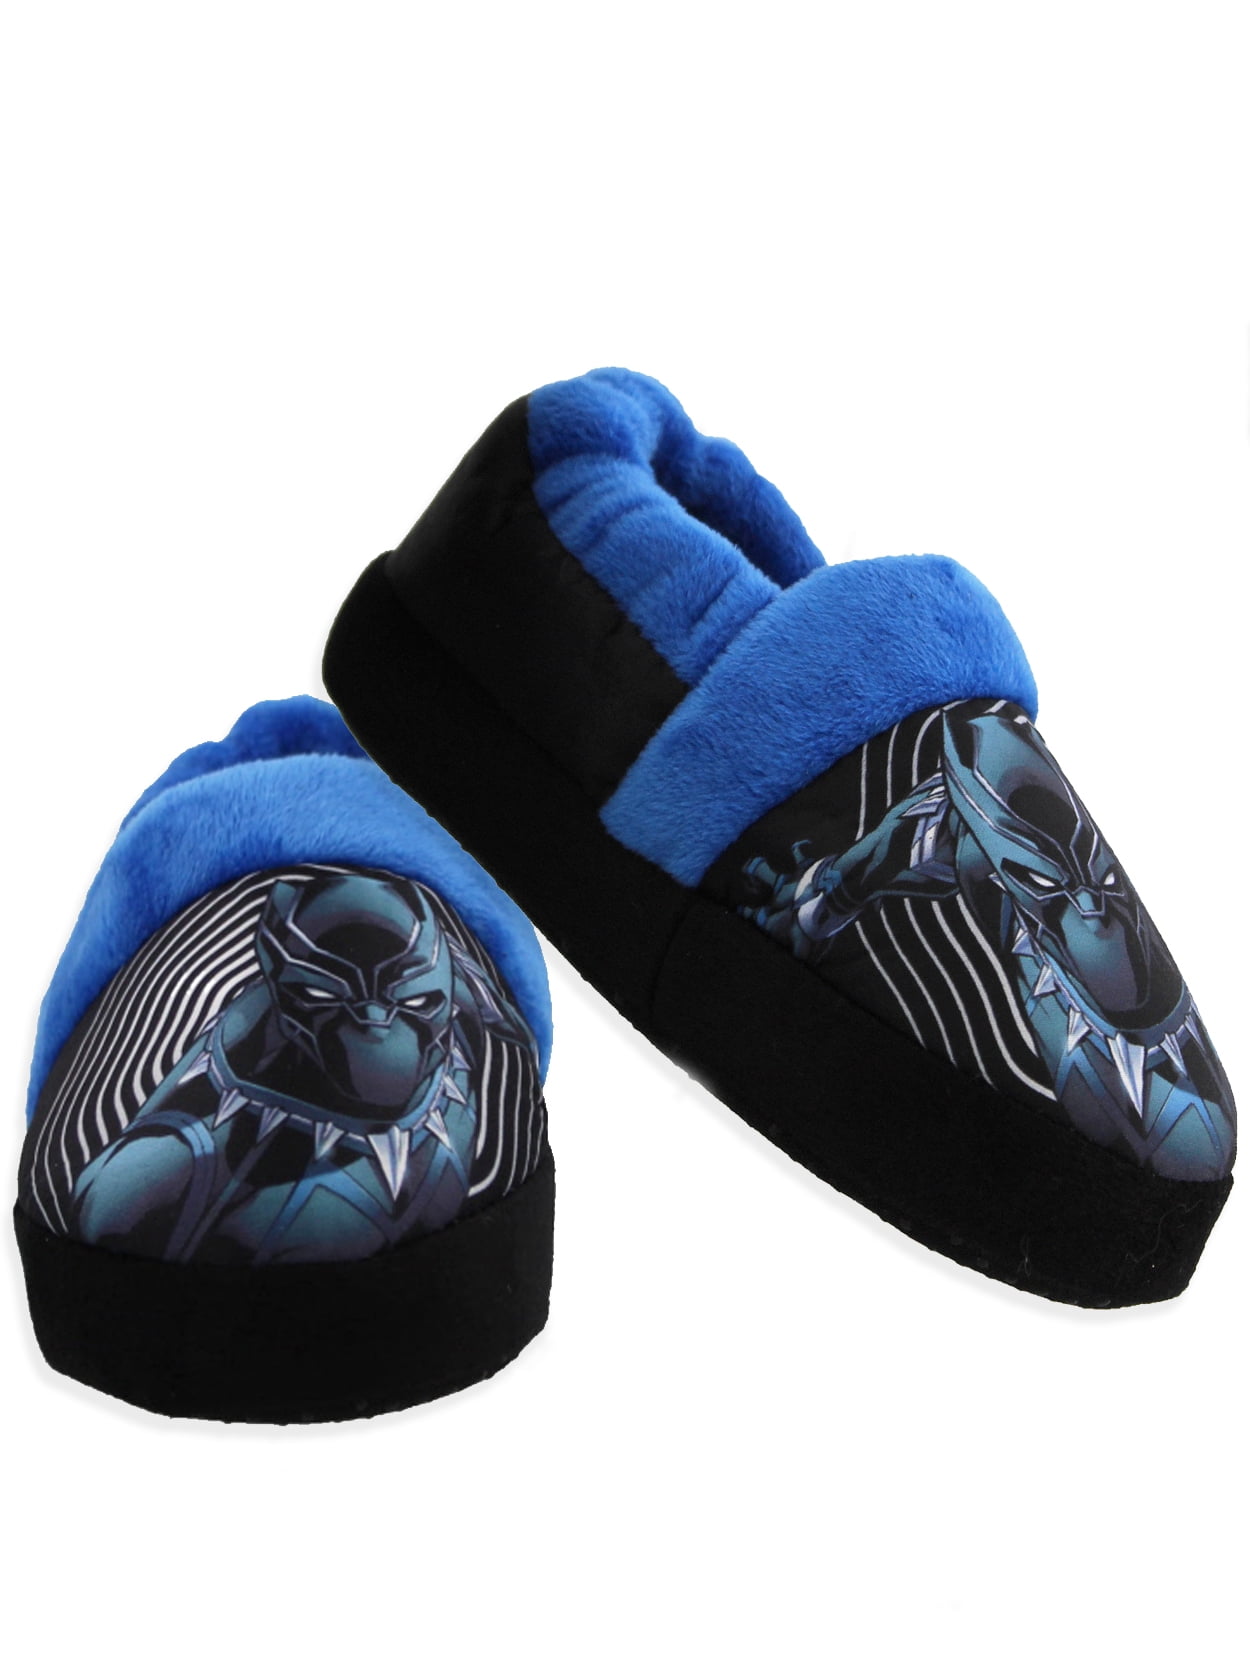 Marvel Avengers Black Panther Boys Slipper Size Small Shoe 13/1 NWT 